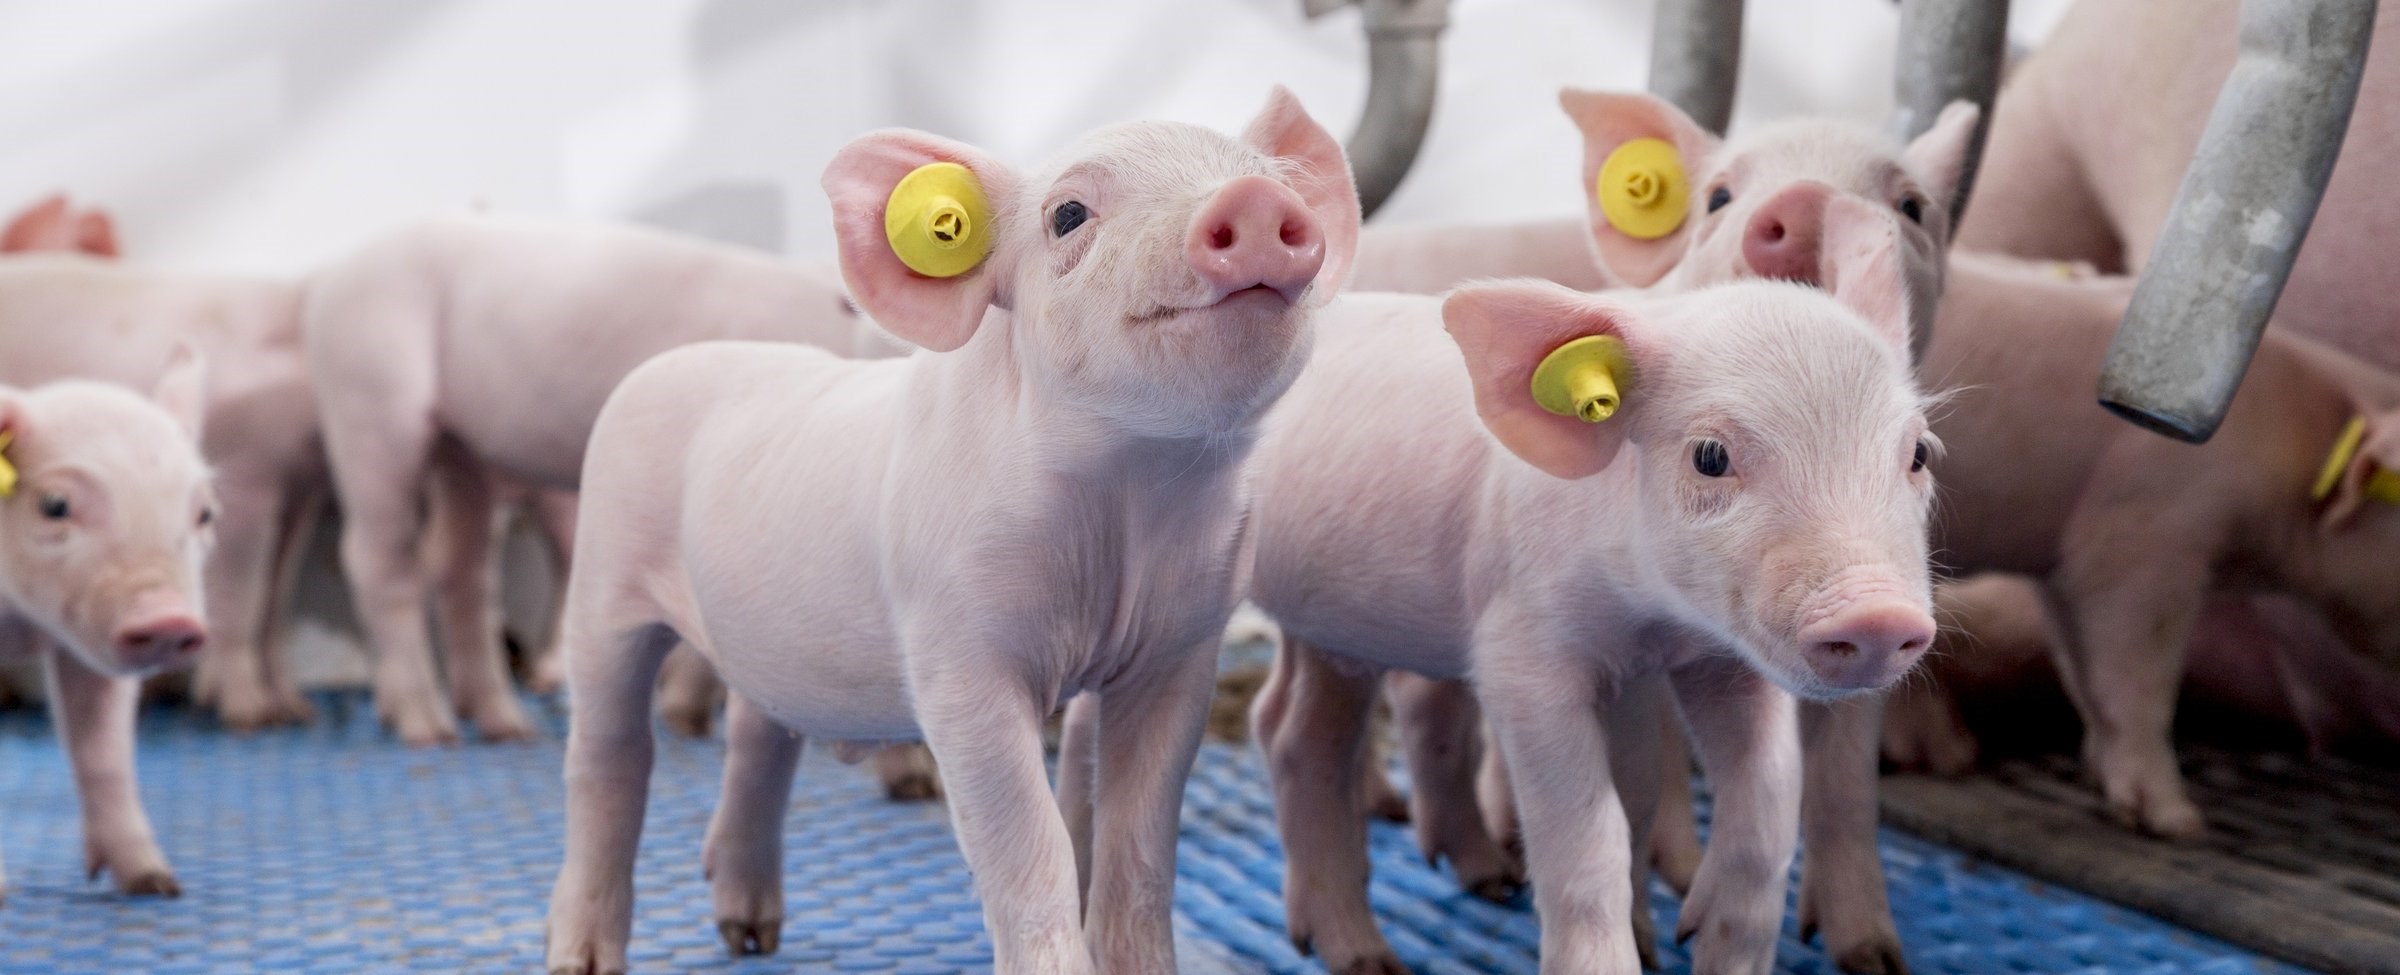 Preventing disease in piglets